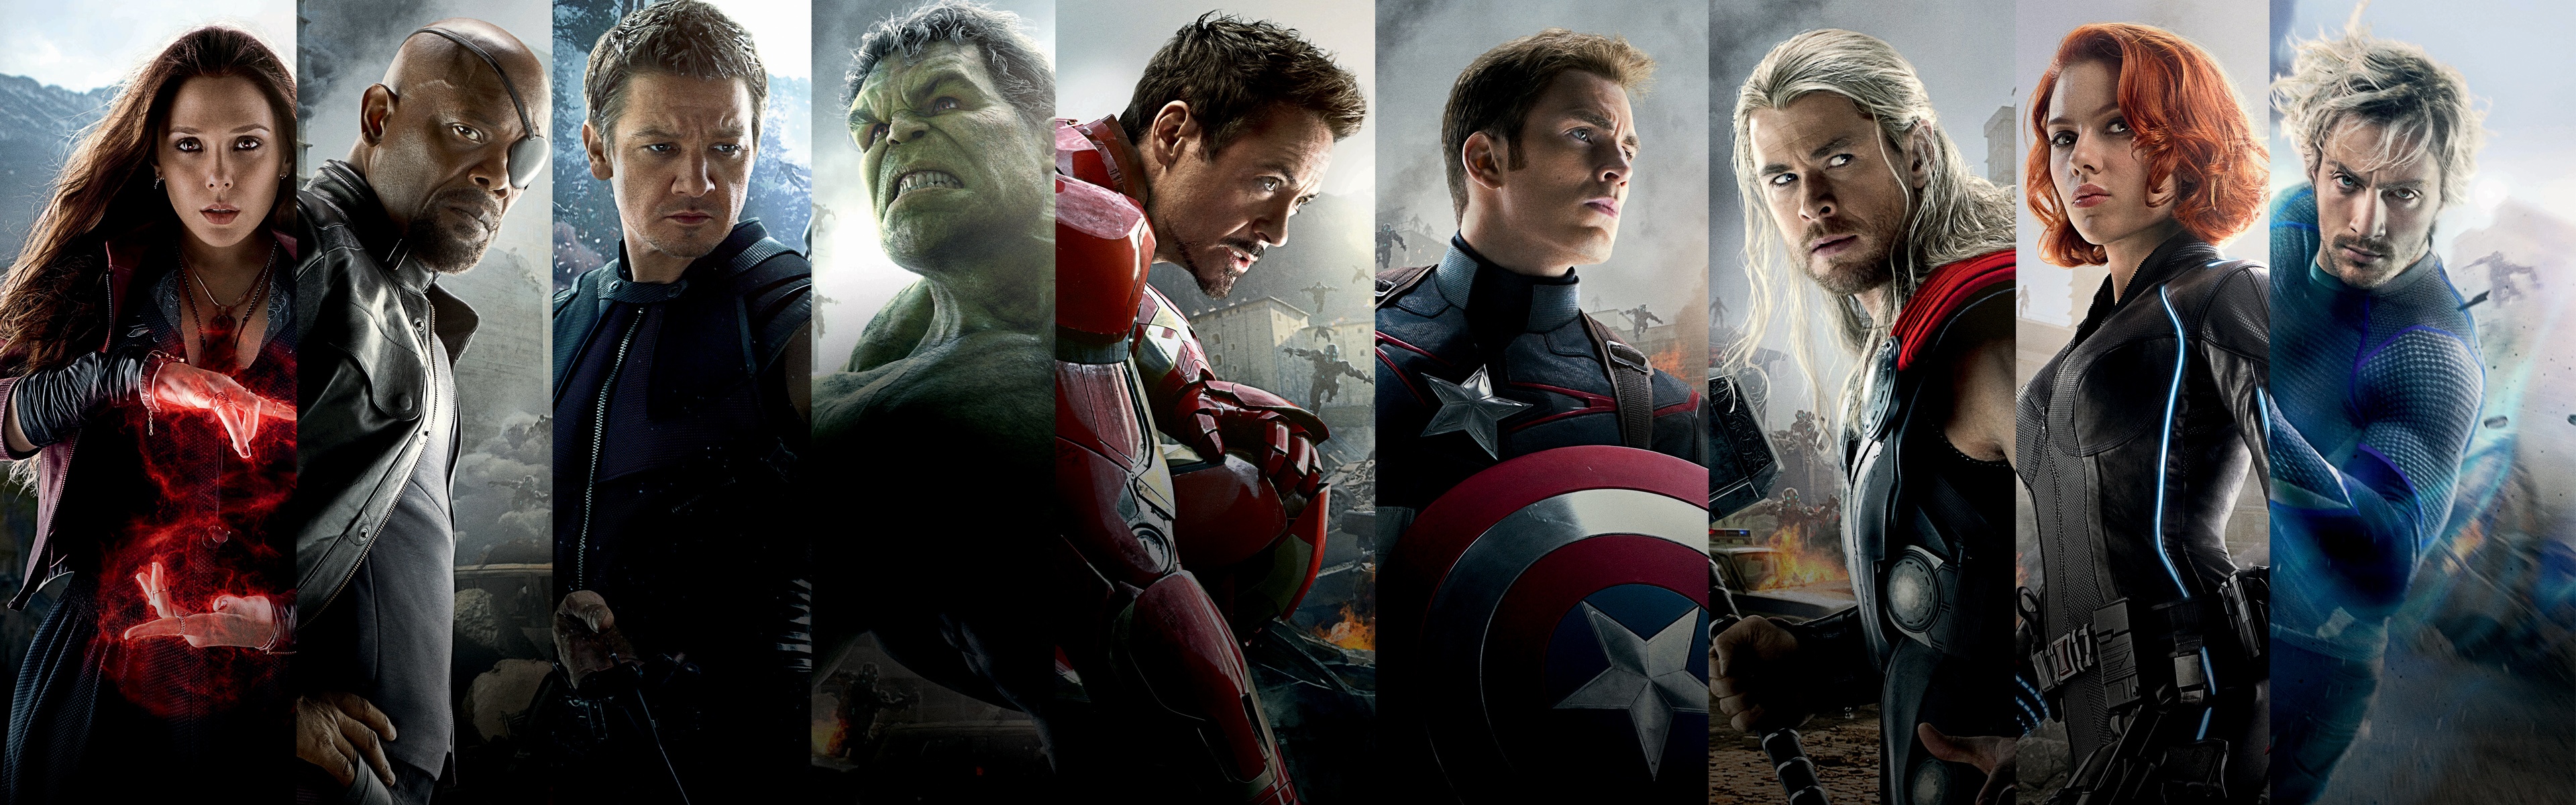 Avengers Age Of Ultron Team Wallpaper HD